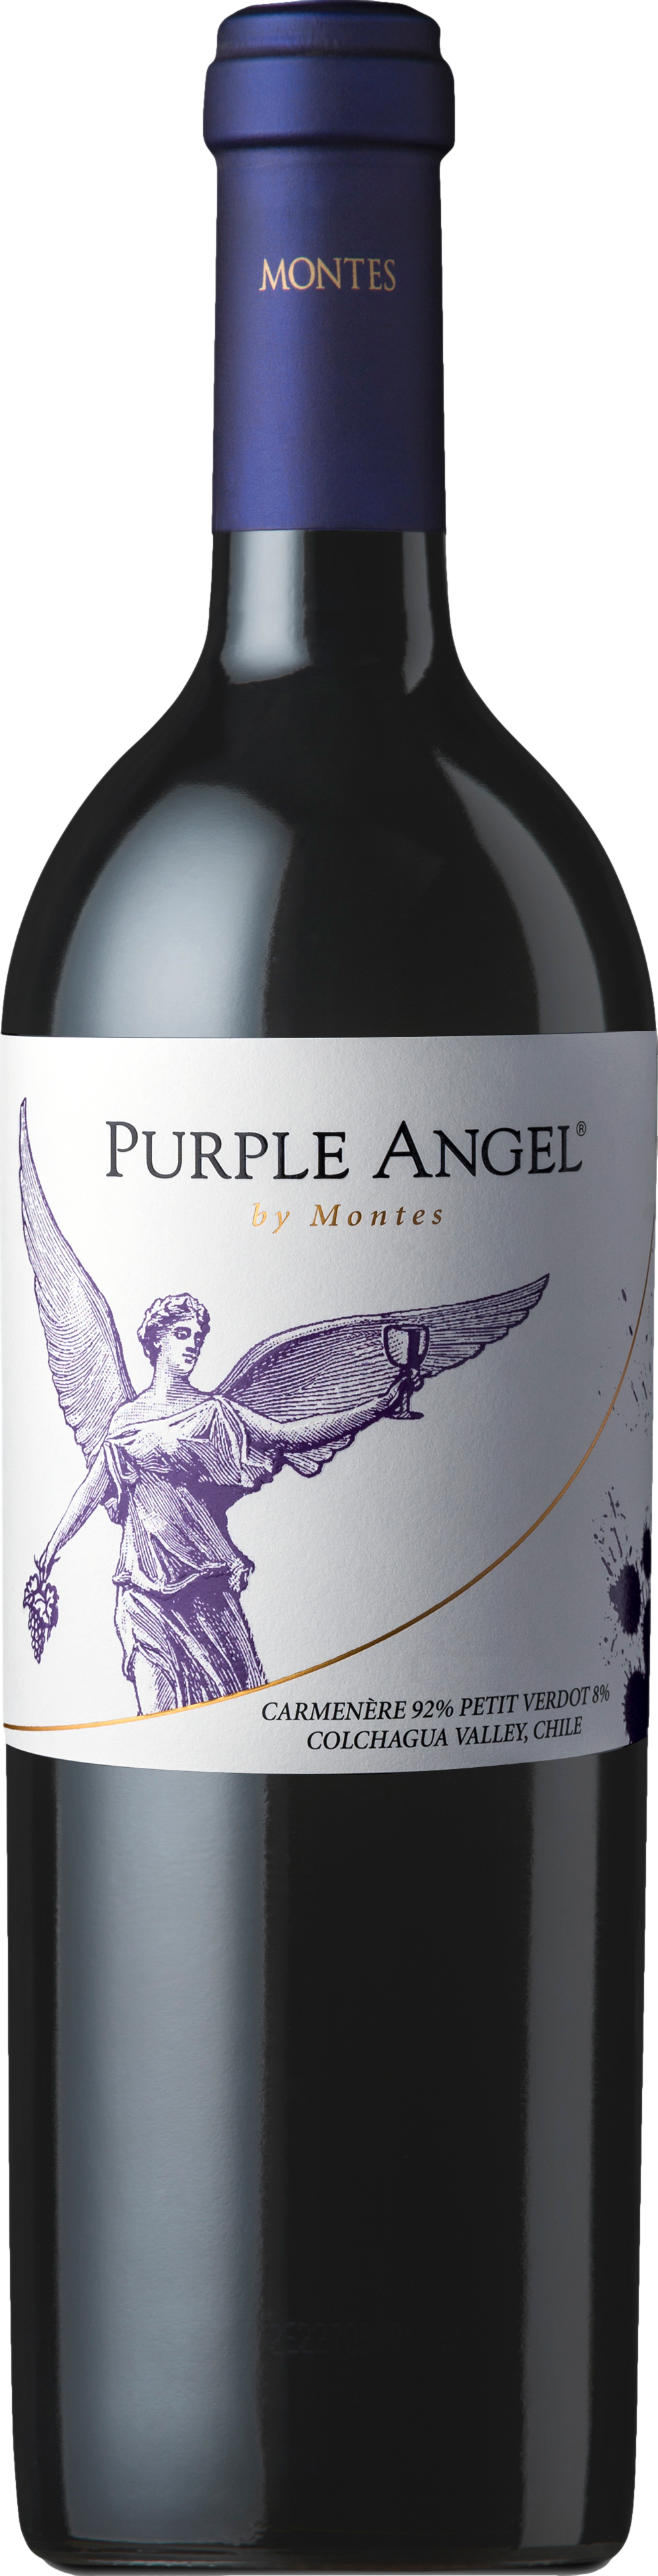 Montes Purple Angel 2019